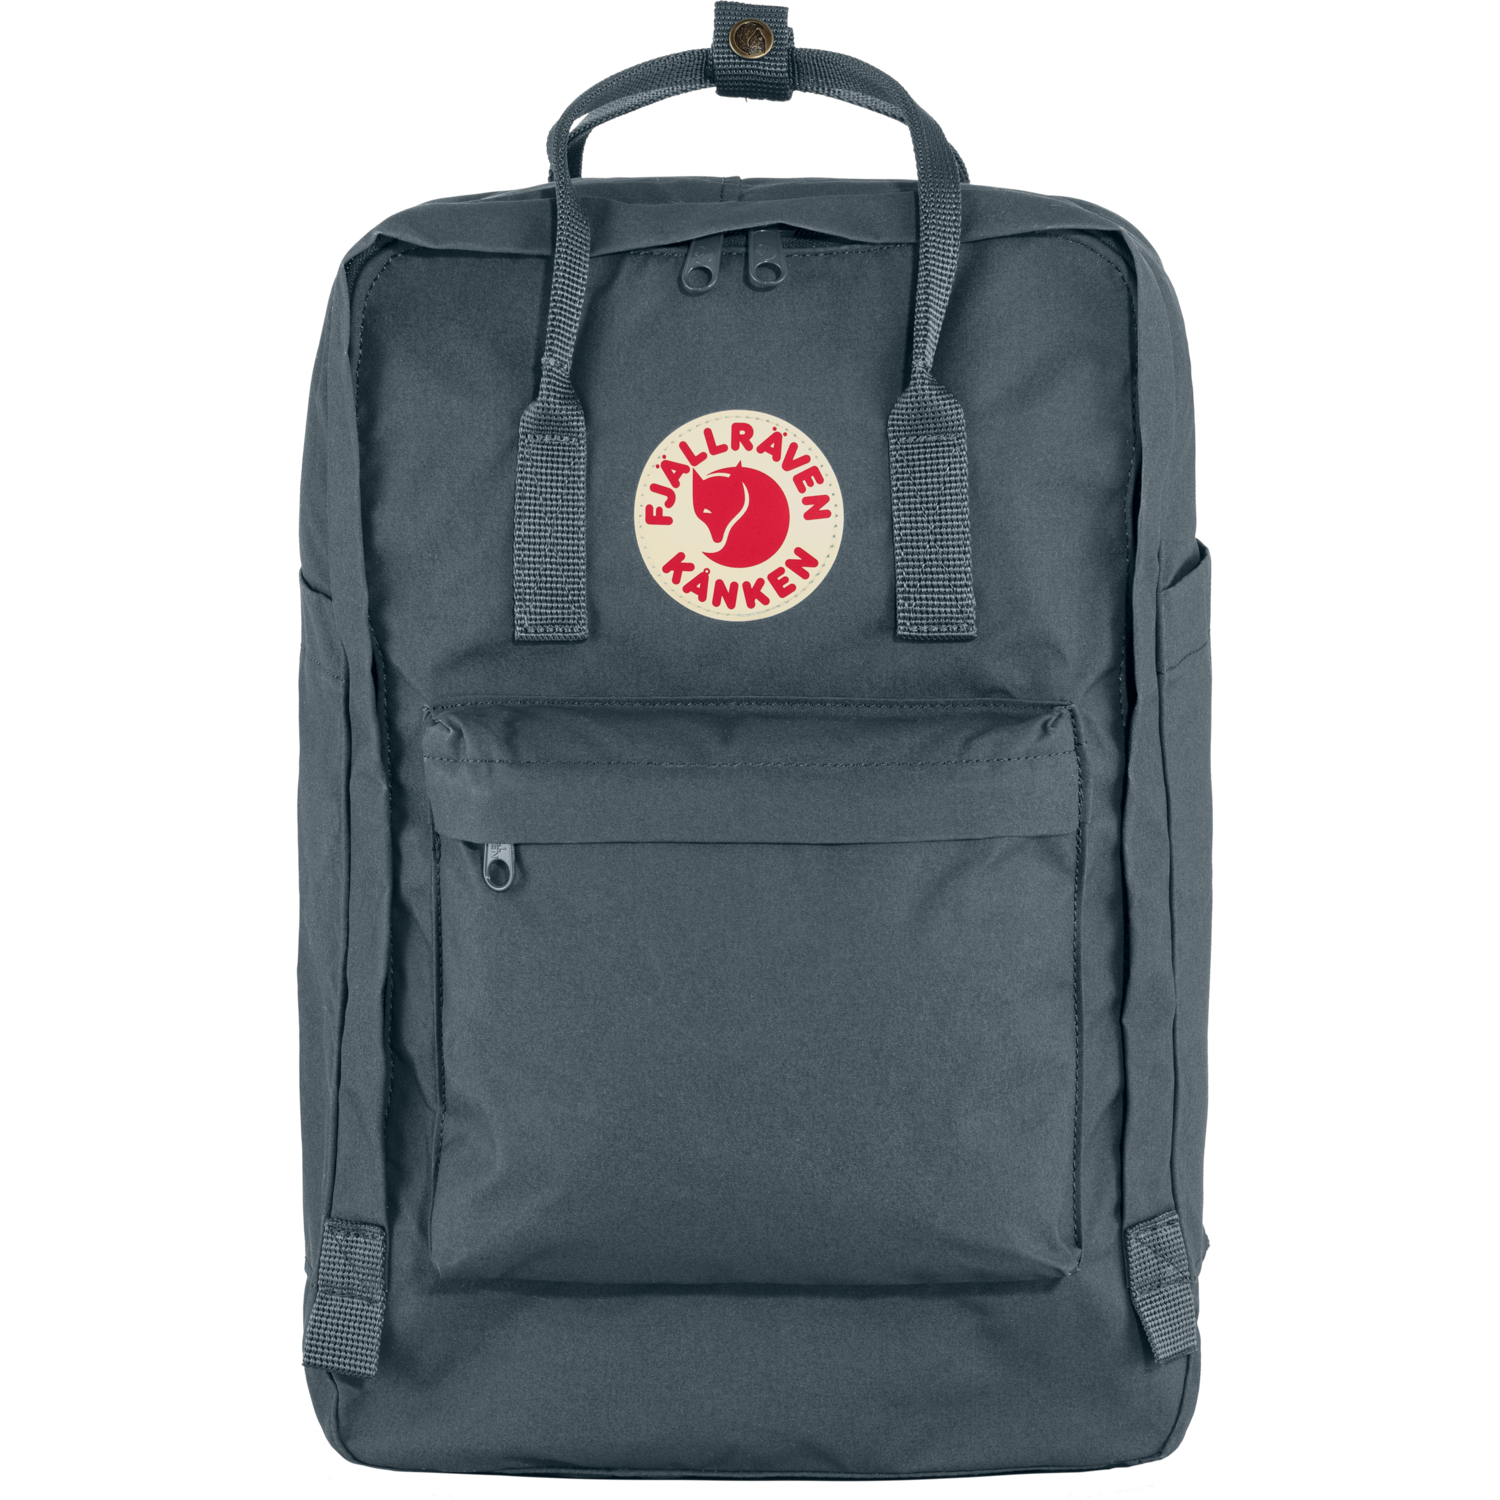 Fjallraven premium branded laptop backpack